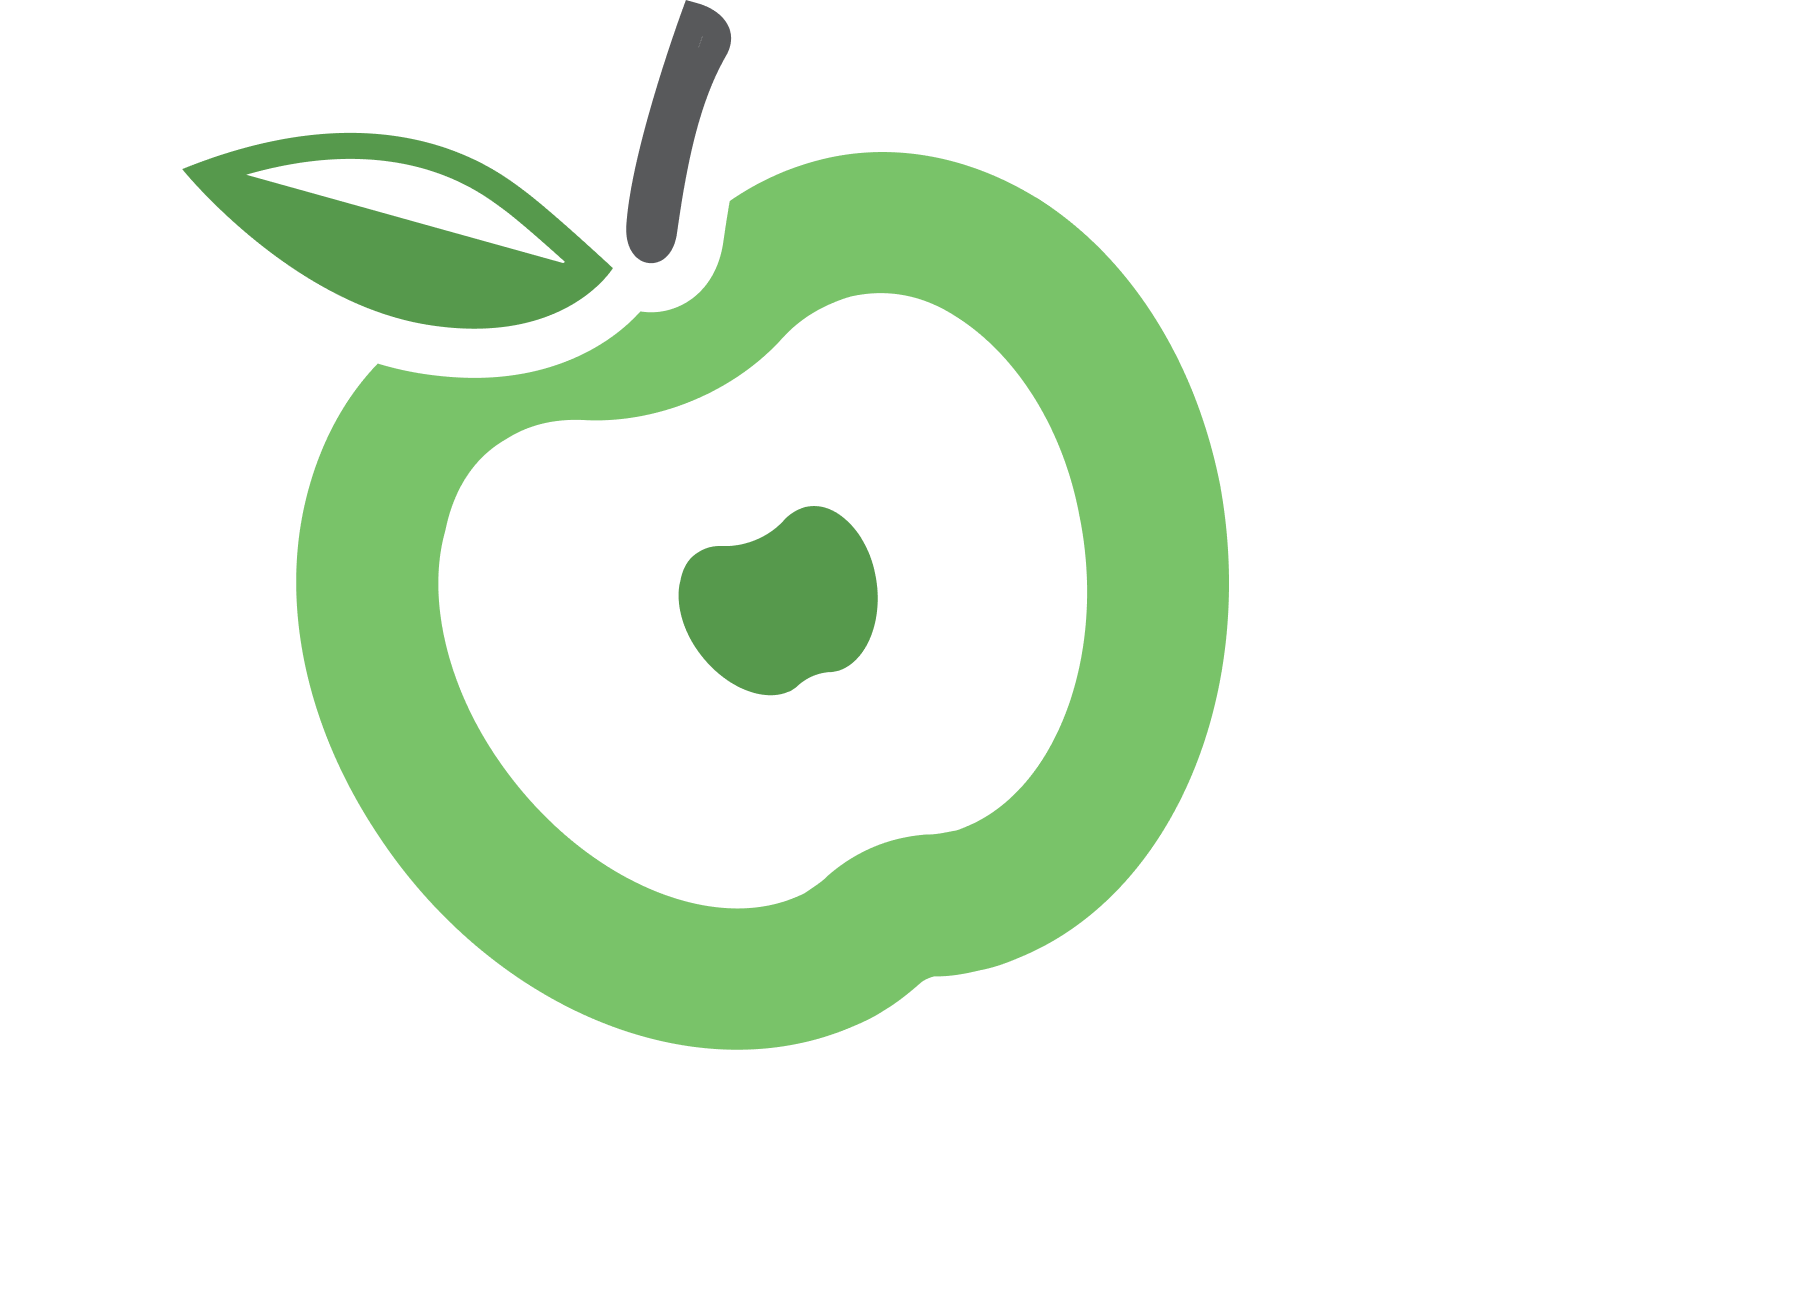 Joe Apfelbaum logo